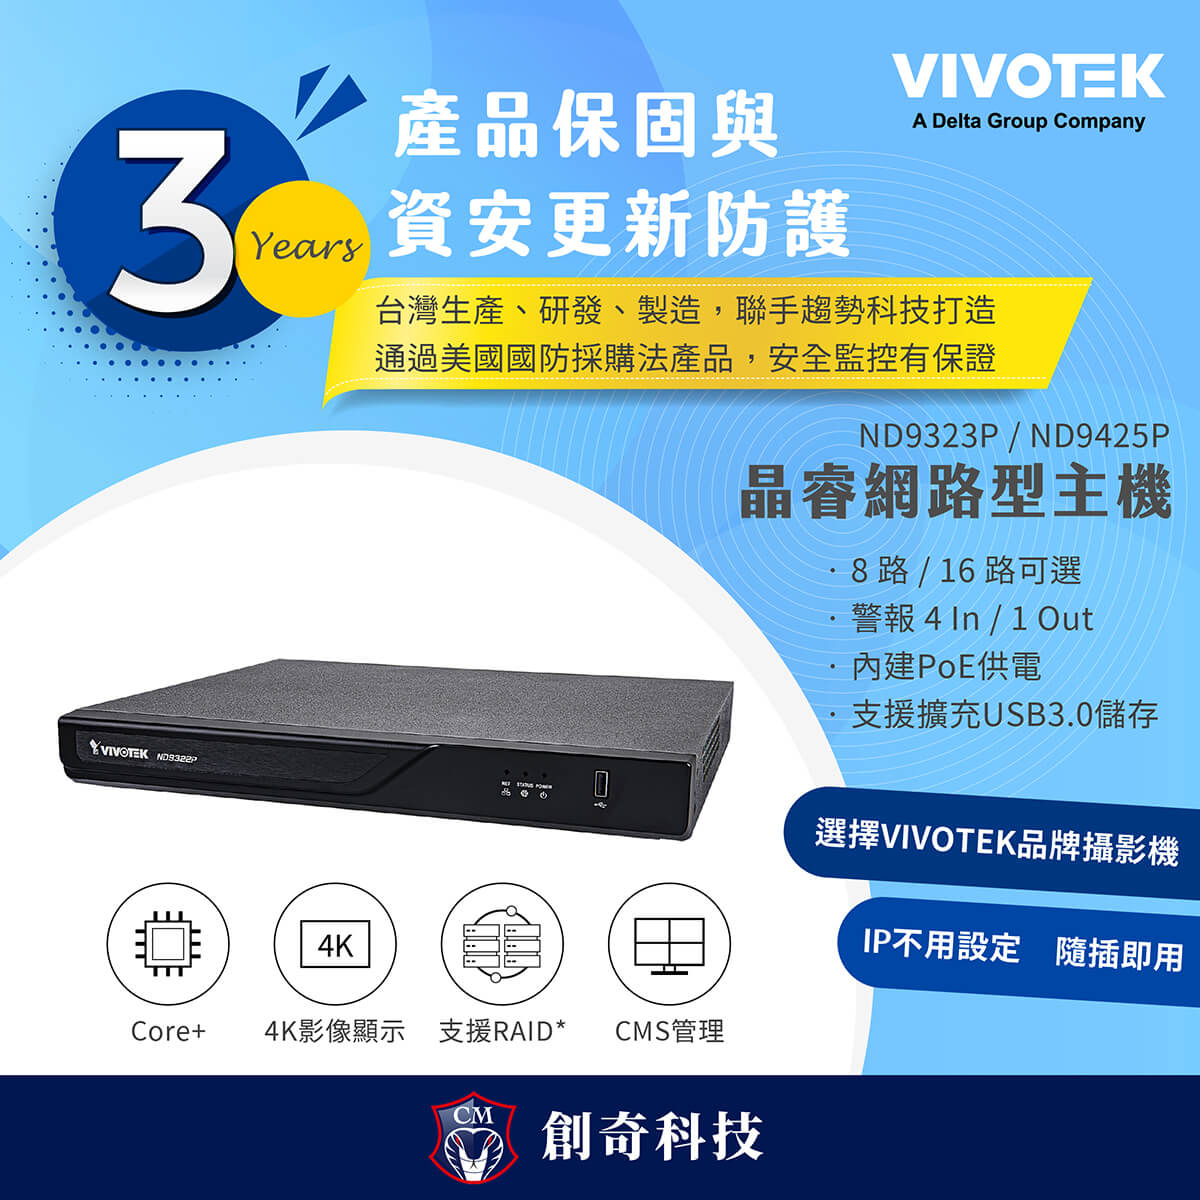 VIVOTEK 晶睿網路型主機 ND9323P / ND9425P 3年產品保固與資安更新防護